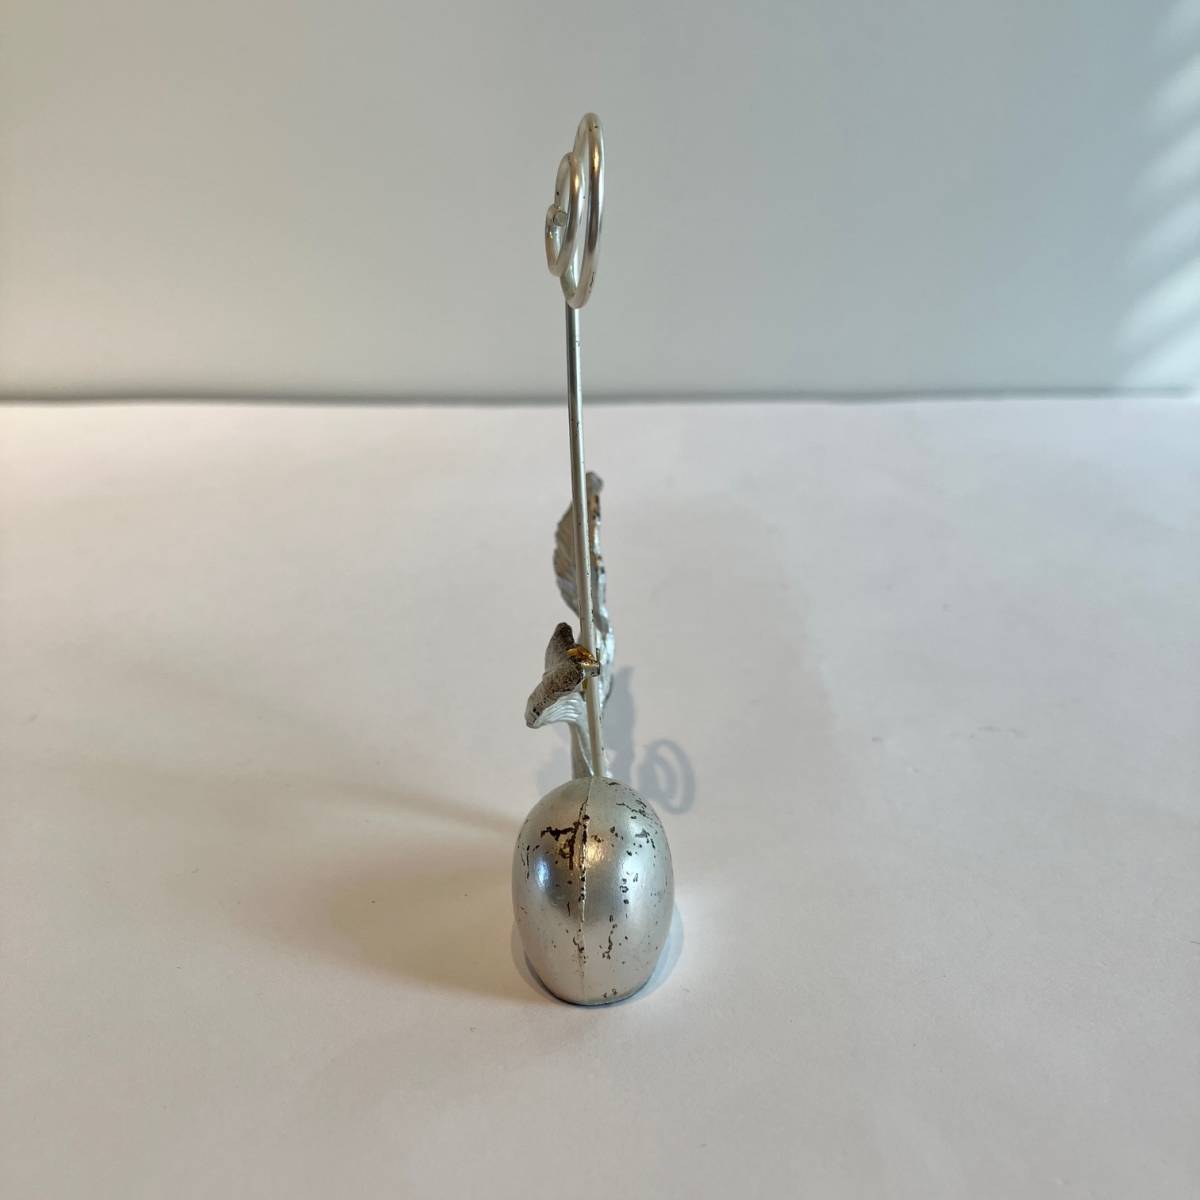  bird silver memory holder memory stand clip ornament 